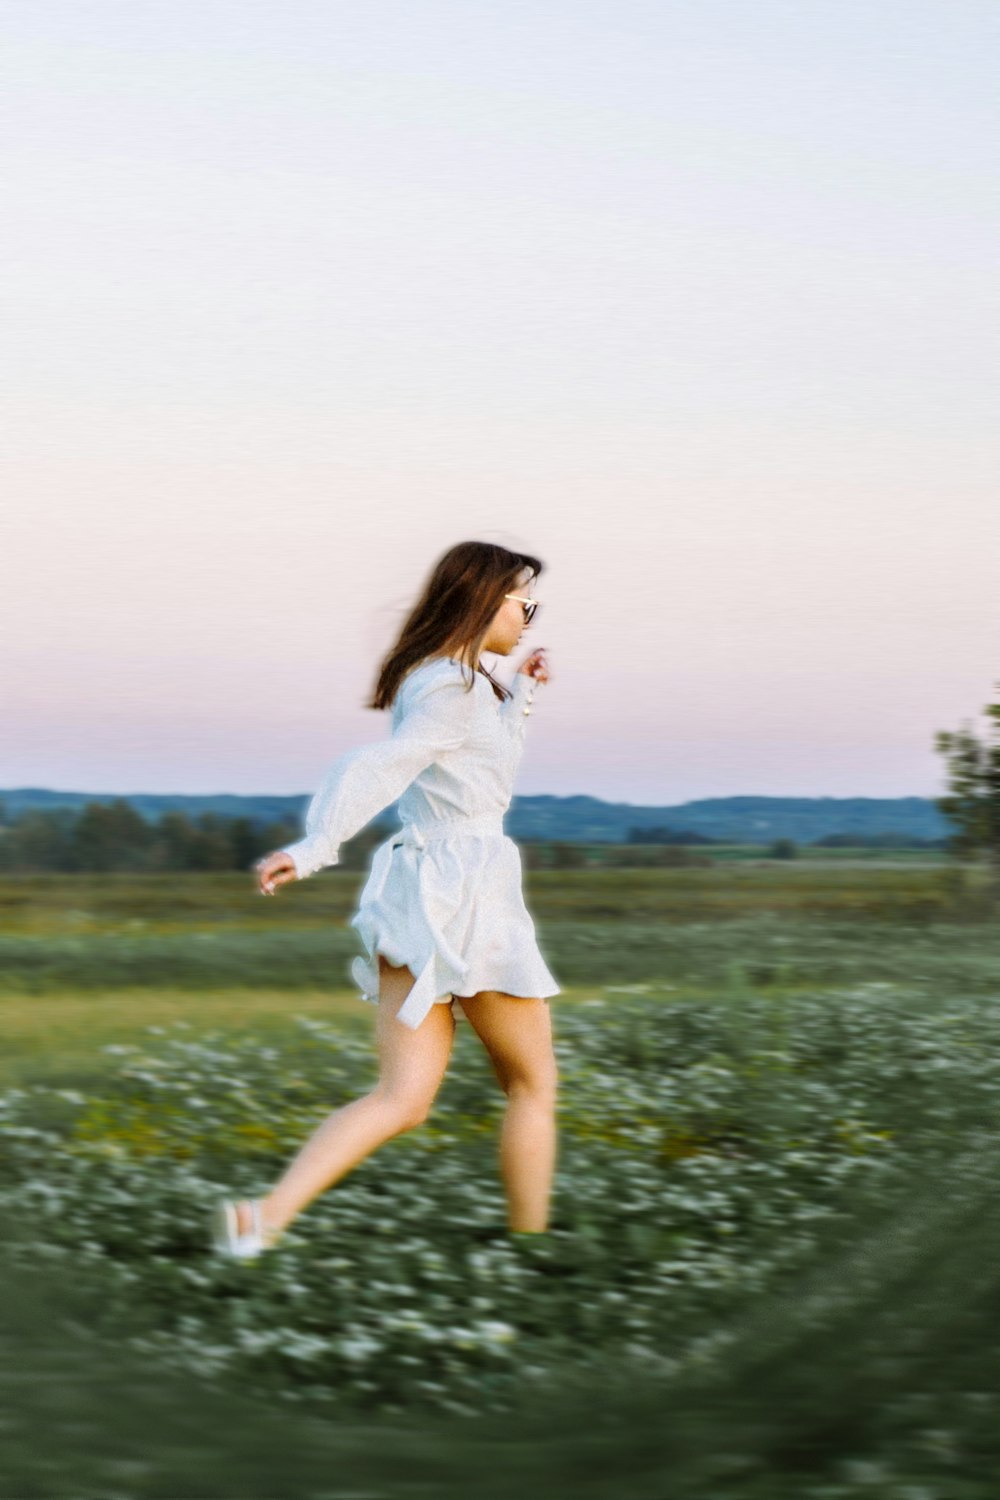 a woman in a white dress running through a field